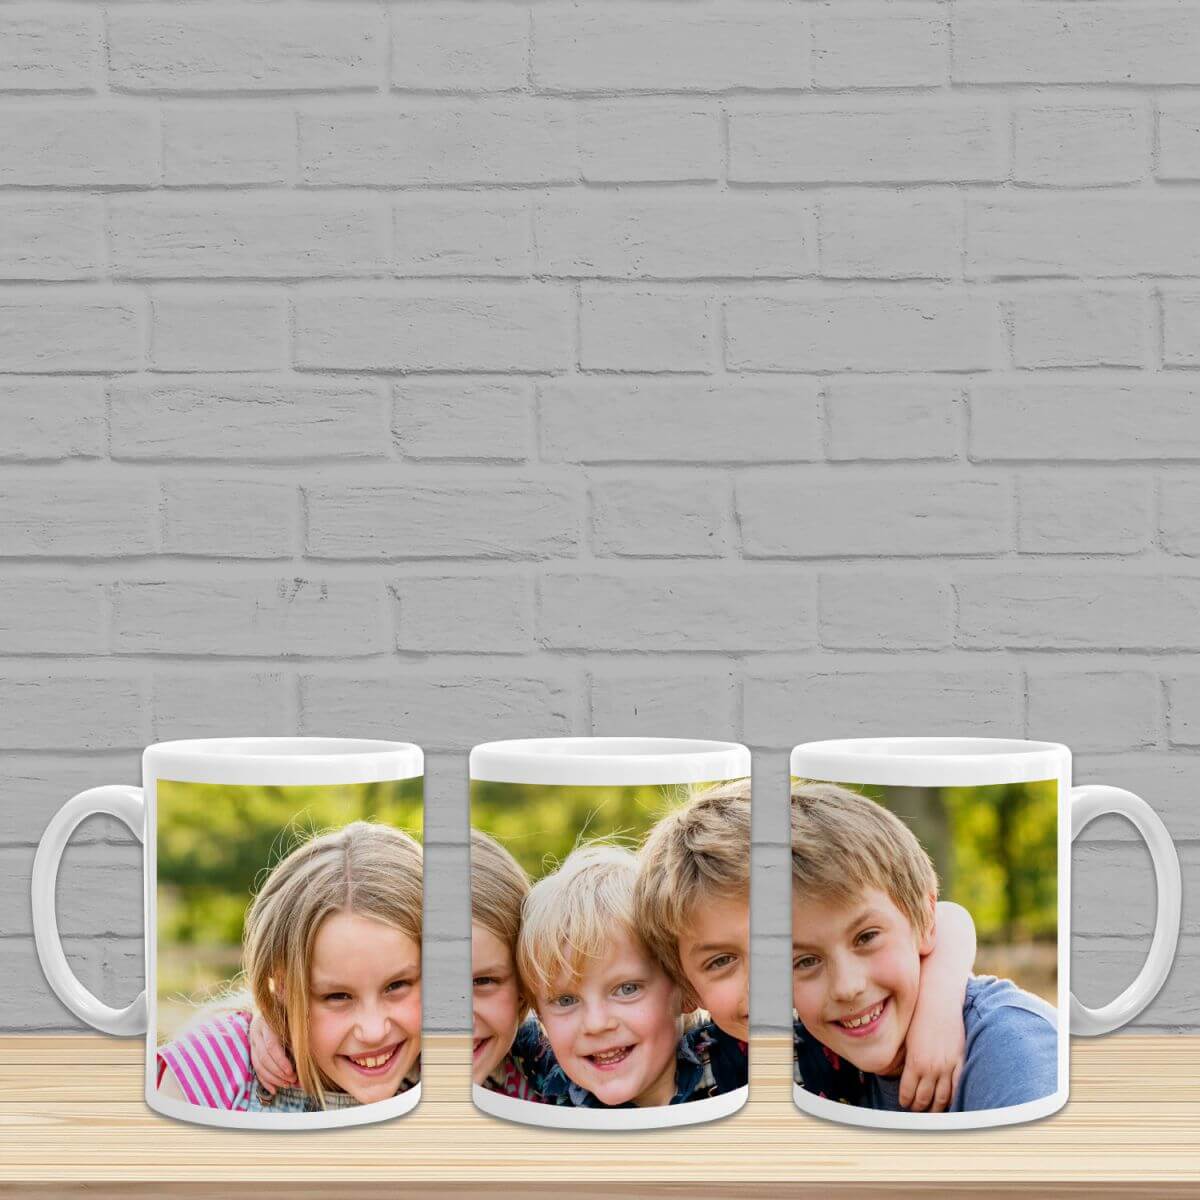 11oz-White-Ceramic-Mug-personalised-3side-view-3kids-park-brick-wall-shelf-bgnd